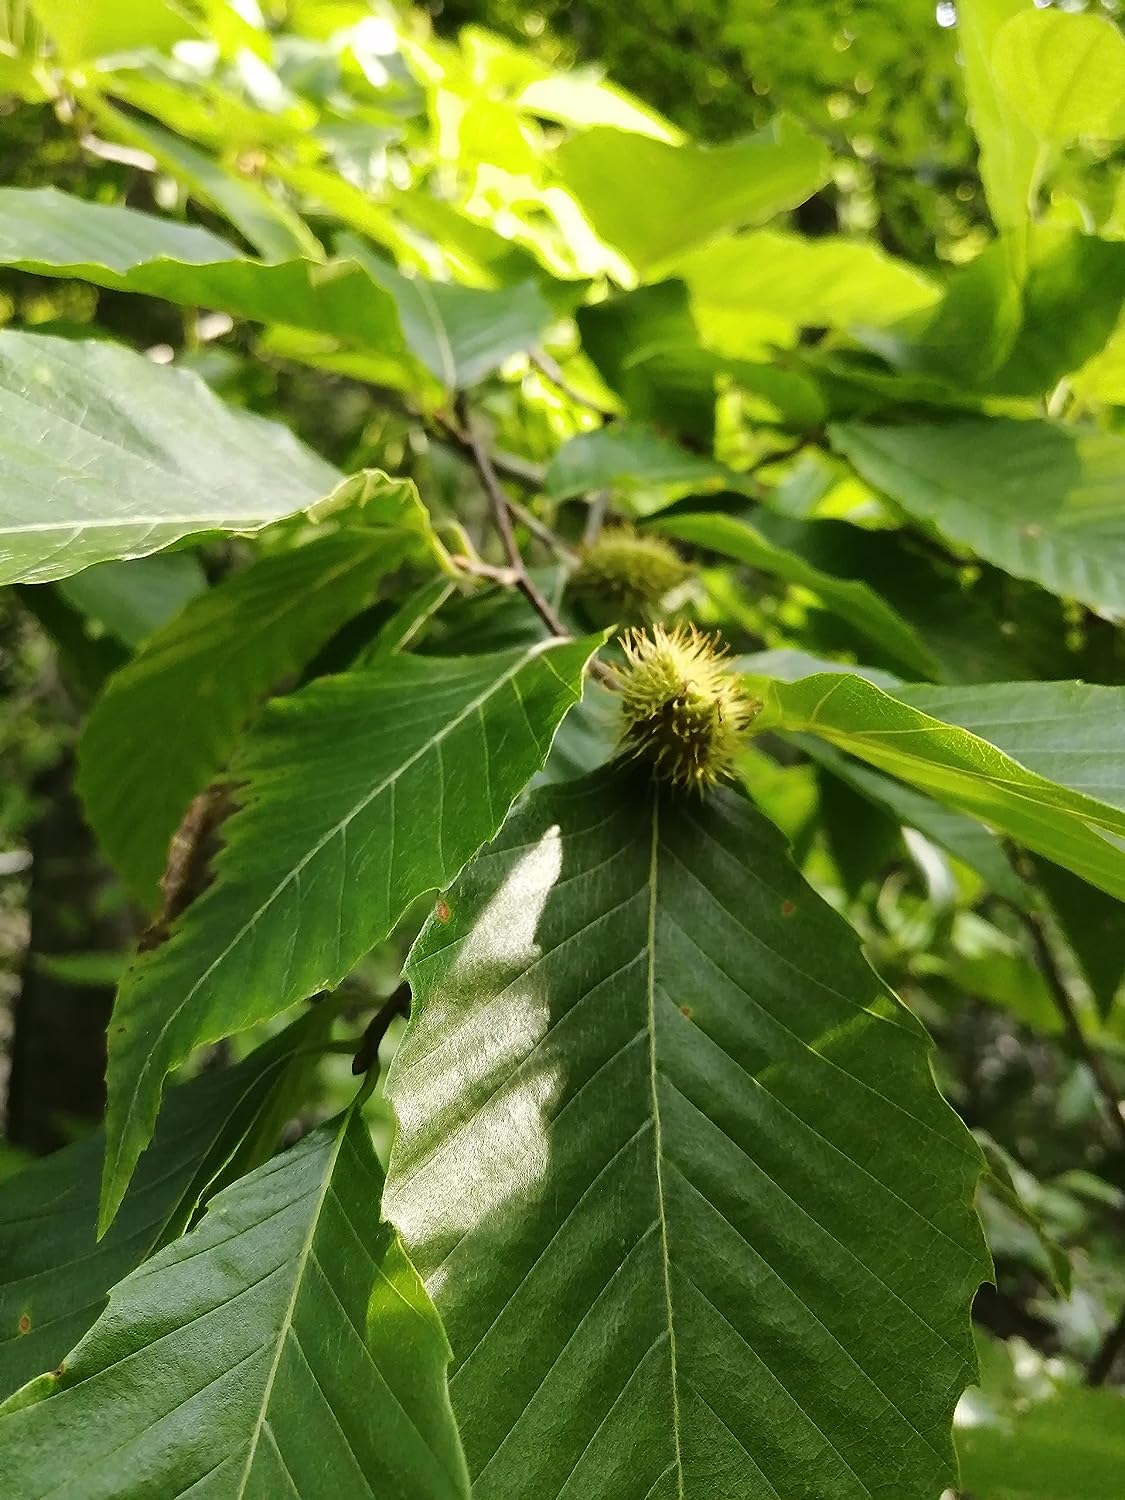 Hundredfold American Beech 5 Seeds - Fagus grandifolia Canada Native Nut Tree